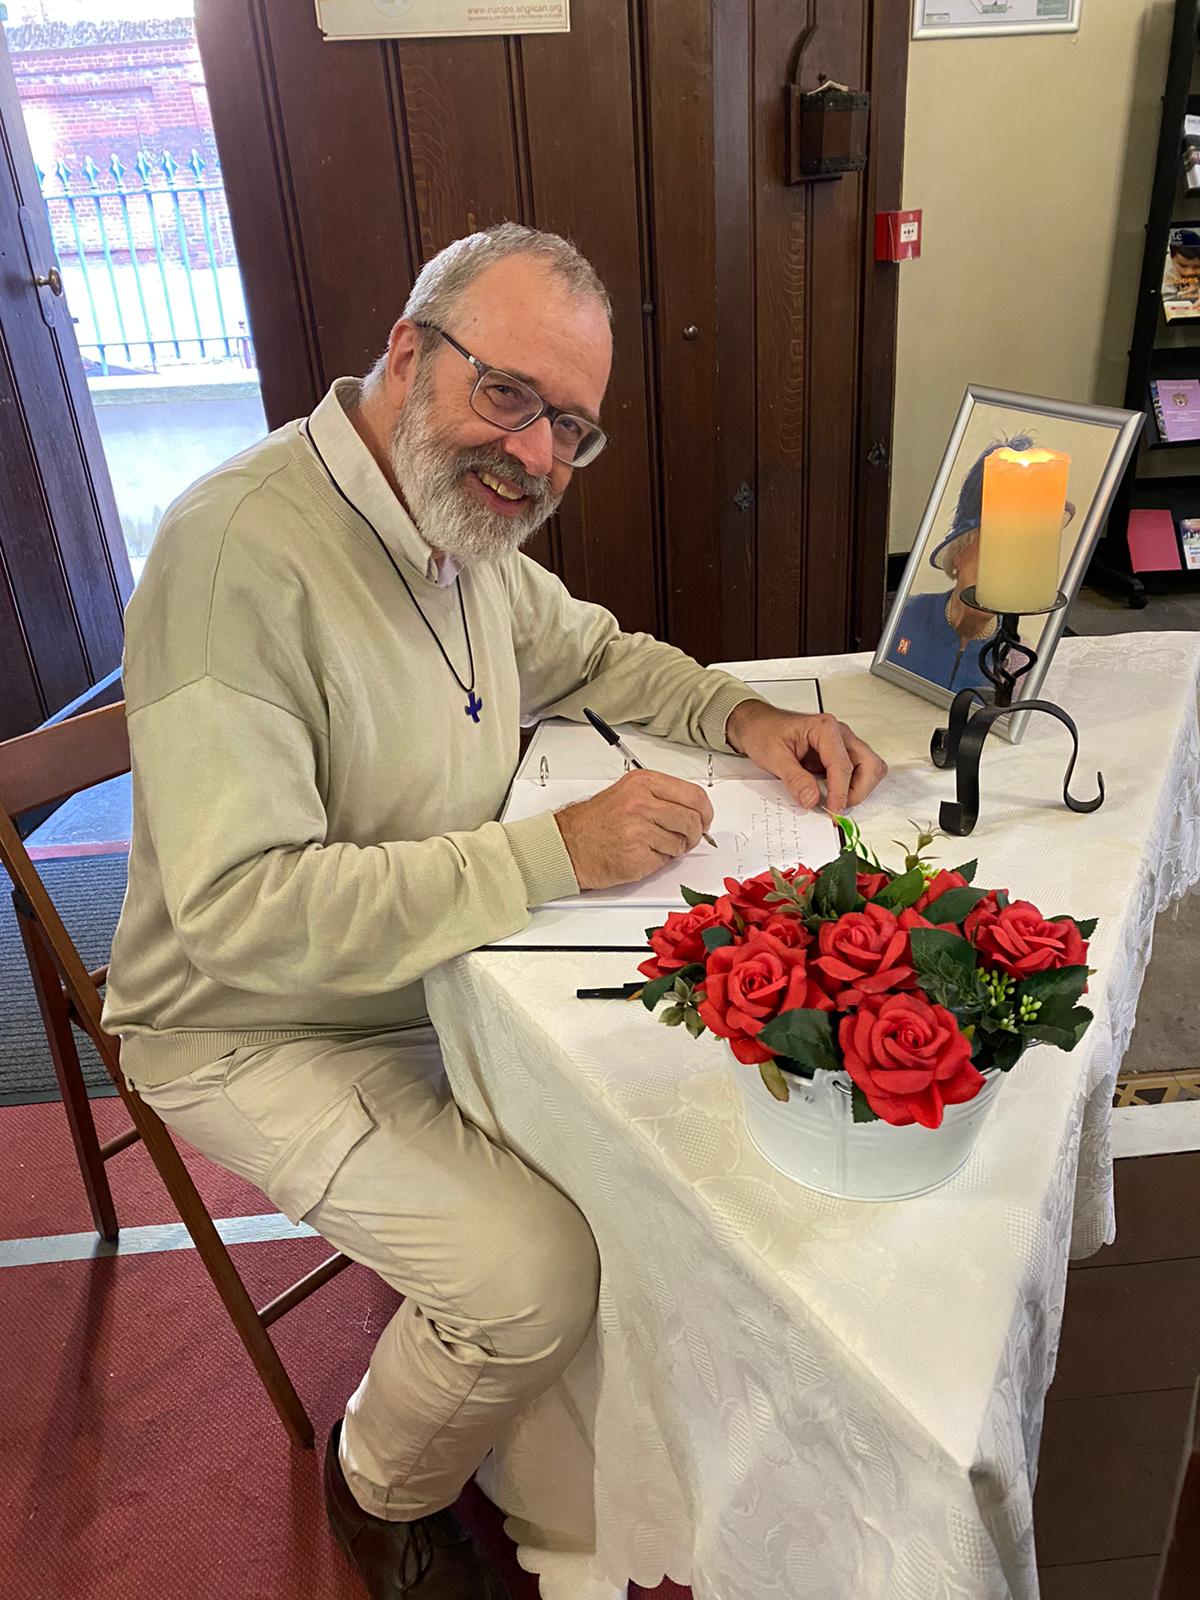 A man writing in a condolences book for the queen.